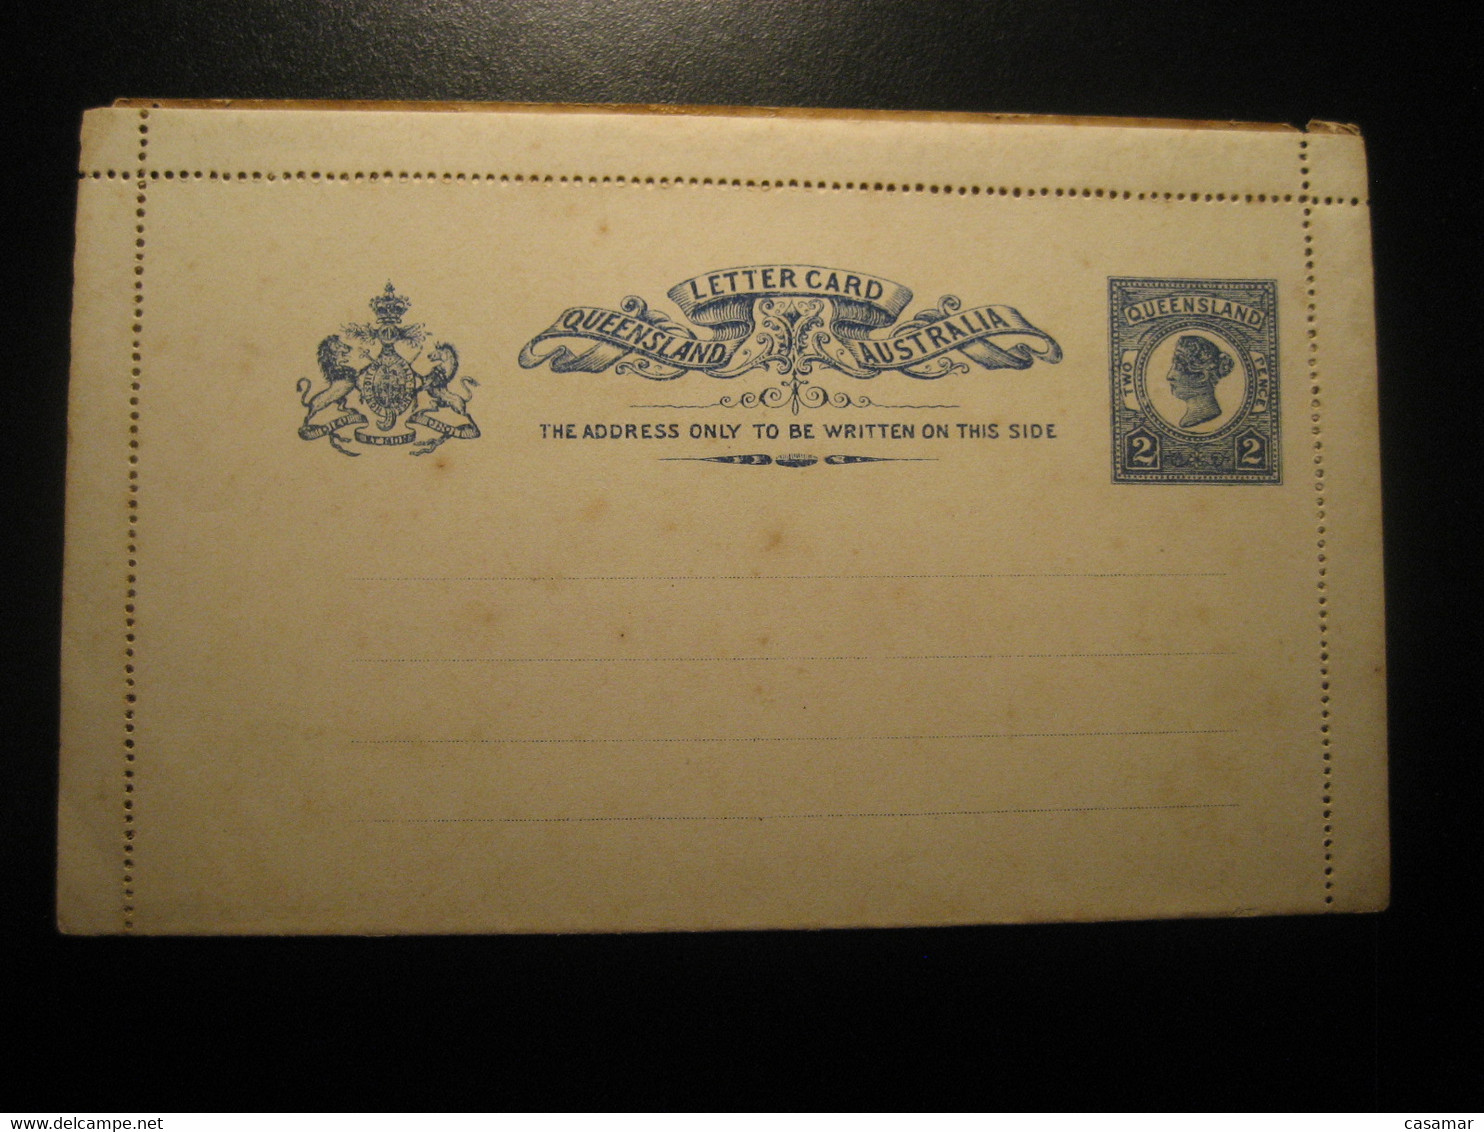 2 Pence QUEENSLAND Cursive Letter Card AUSTRALIA New Guinea New Zealand Fiji Postal Stationery Card - Covers & Documents